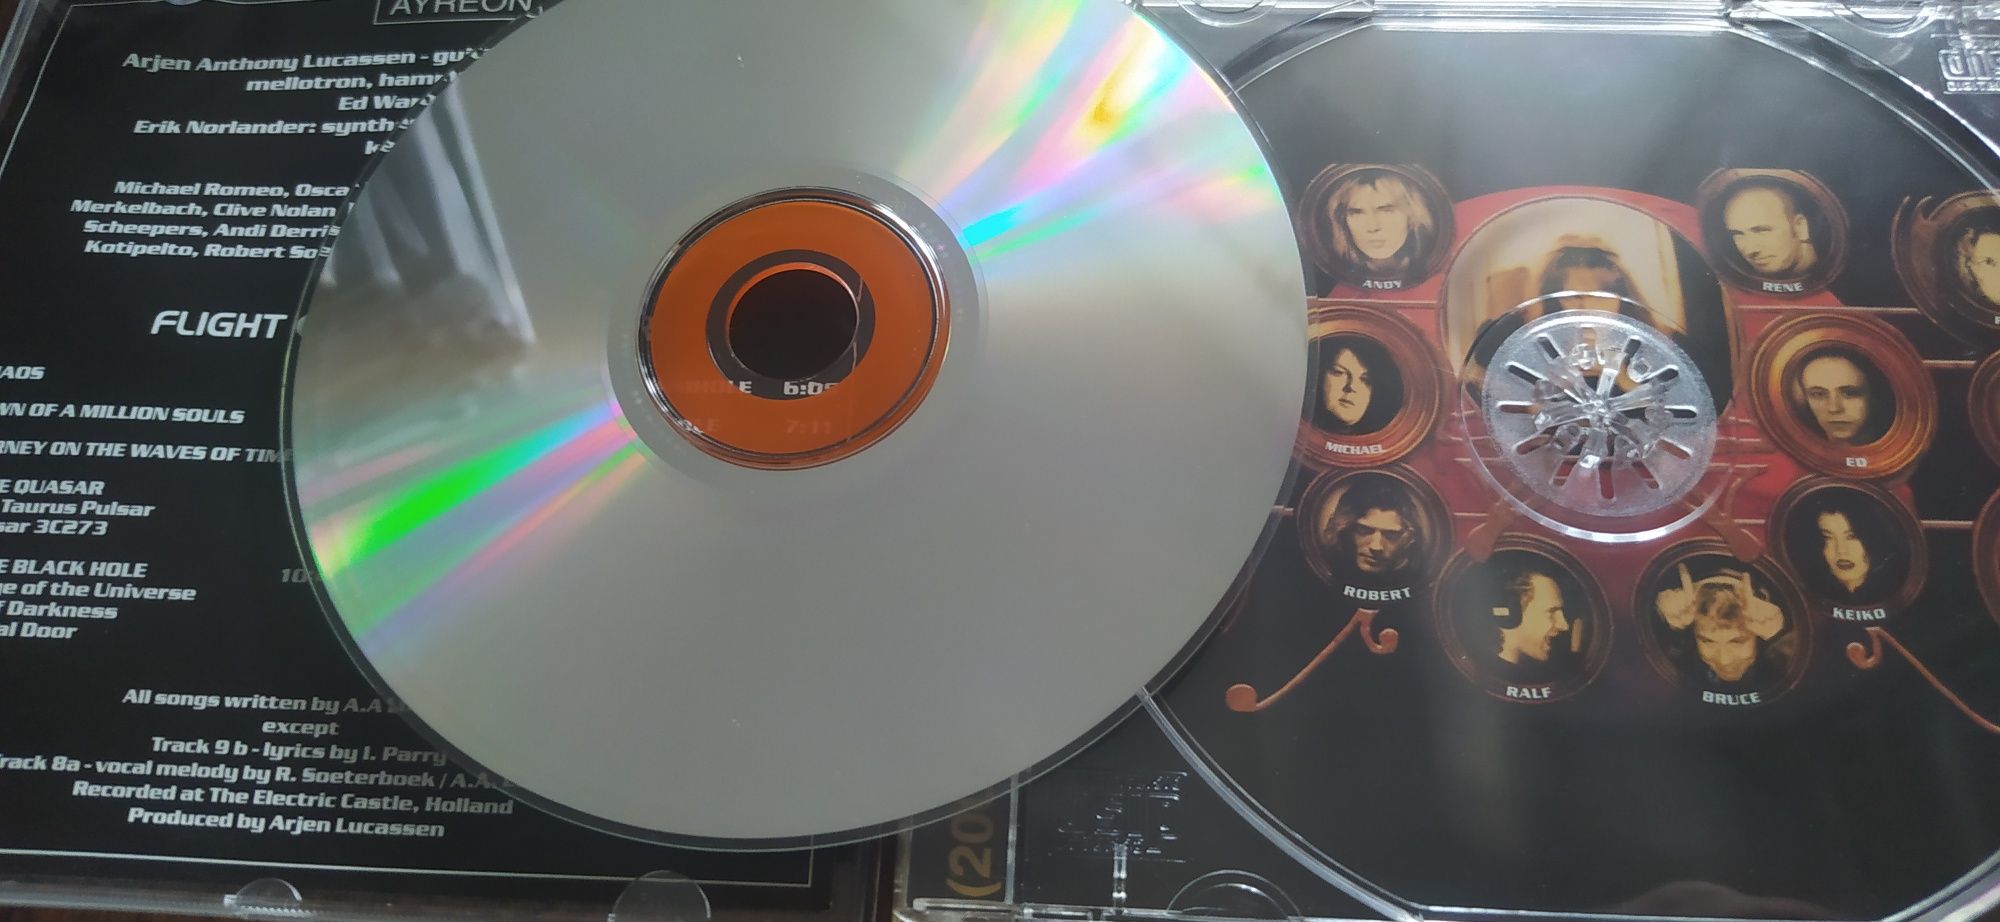 Ayreon Flight of the migrator CD